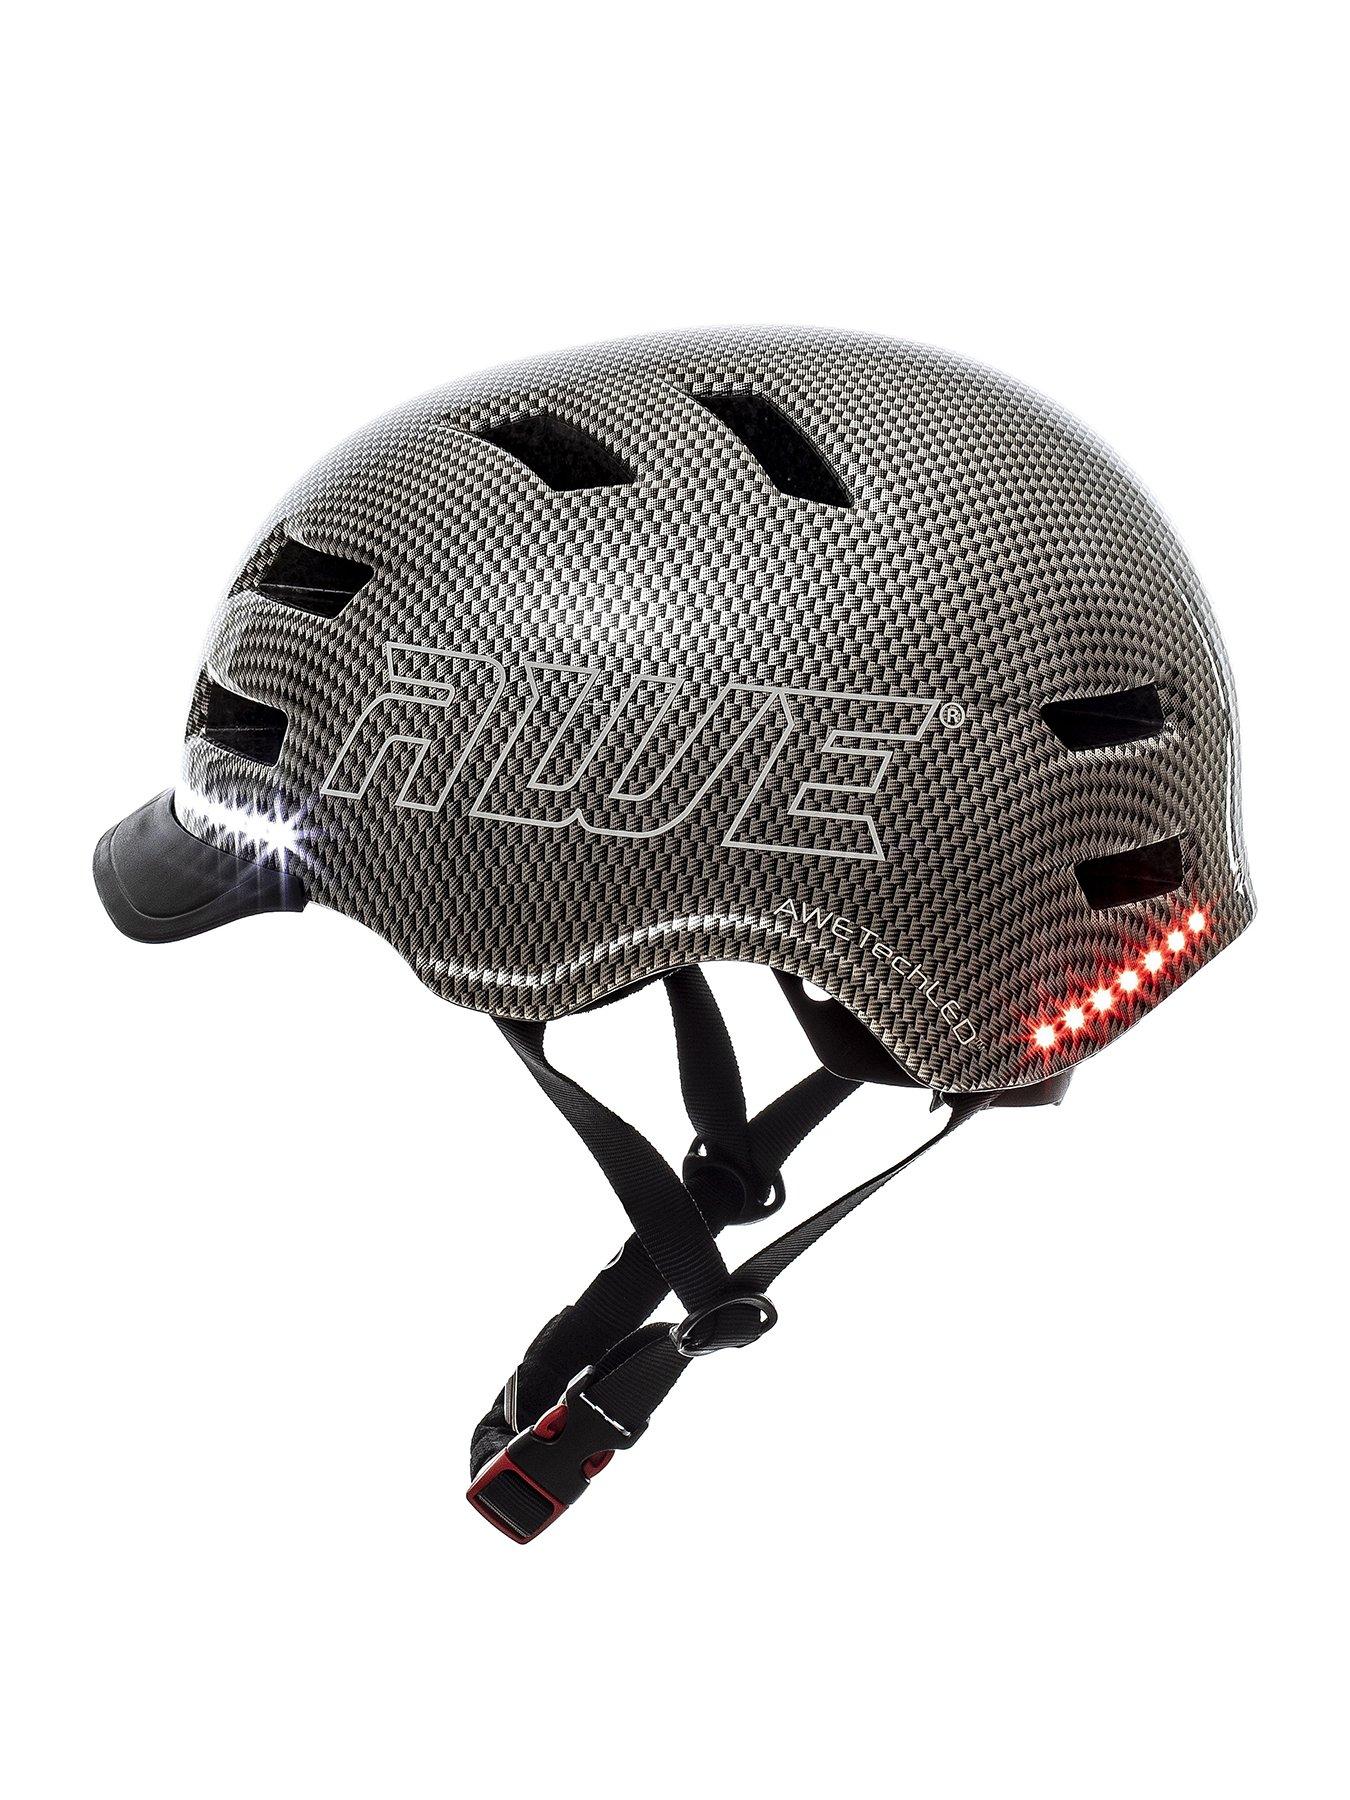 Details about   Bicycle Helmet Adjustable Unisex Cycling Adult MTB Bike Safety Helmet Outdoor UK 